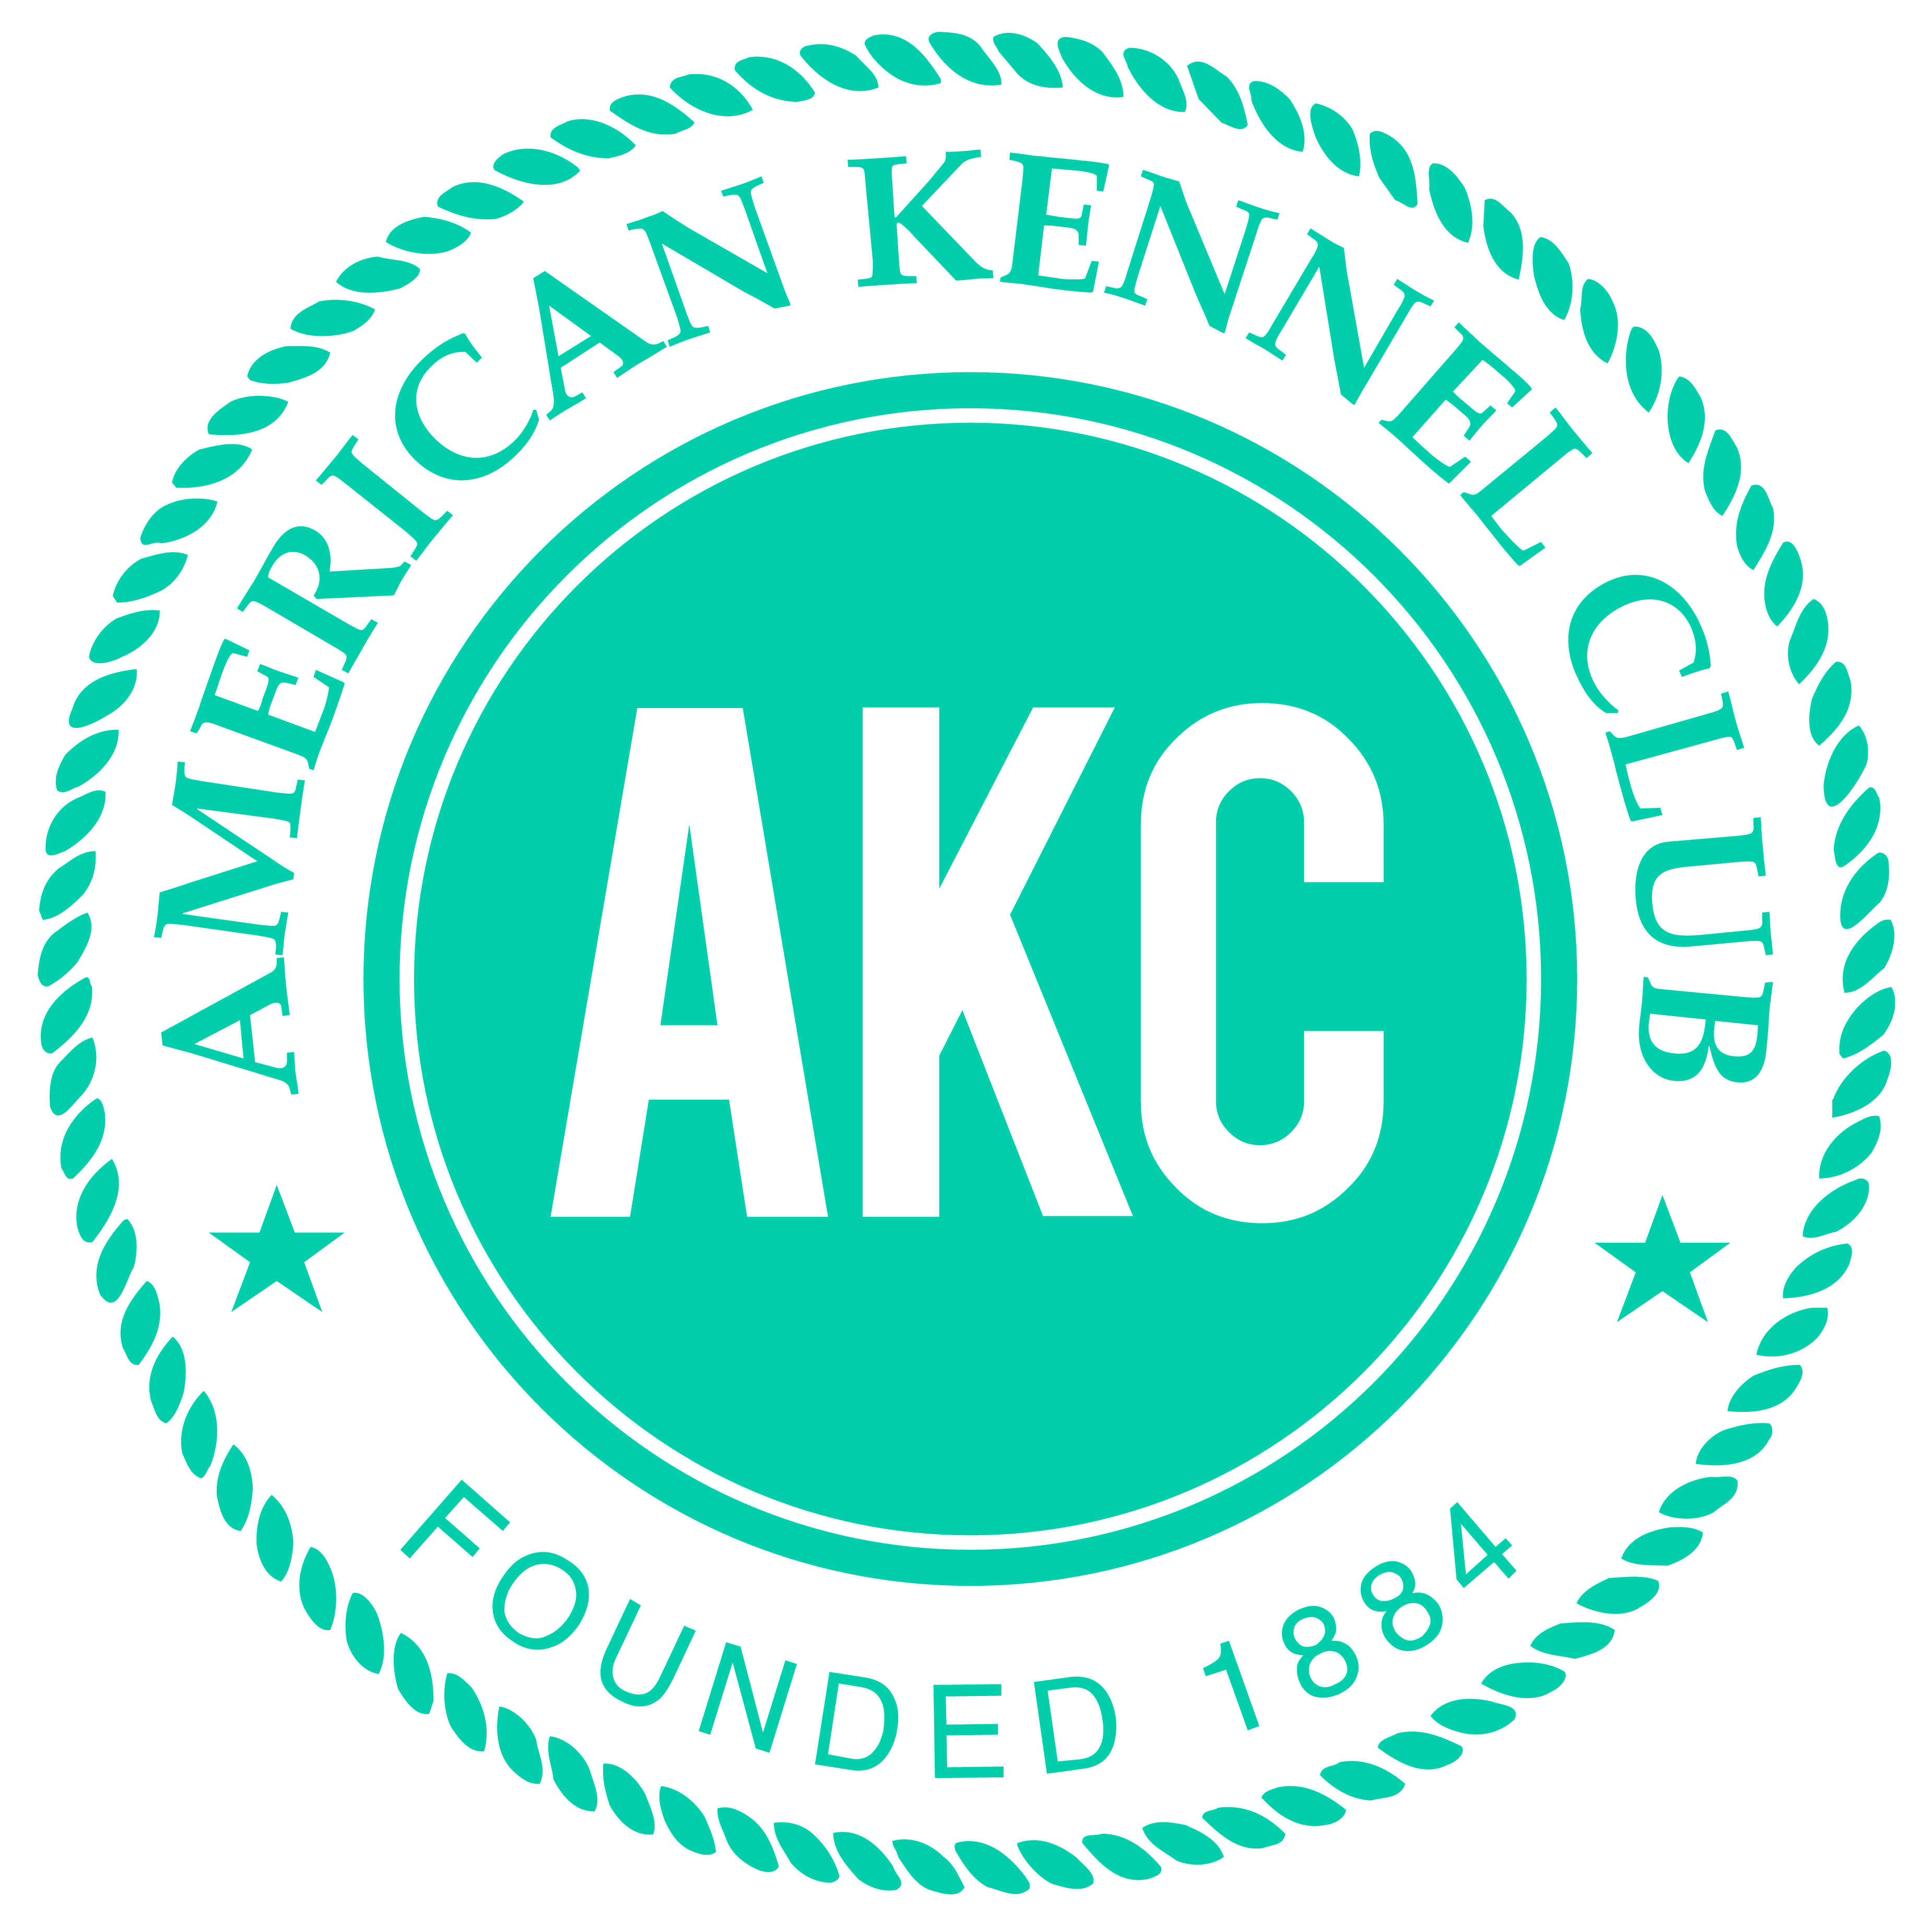 AKC - American Kennel Club logo, logotype